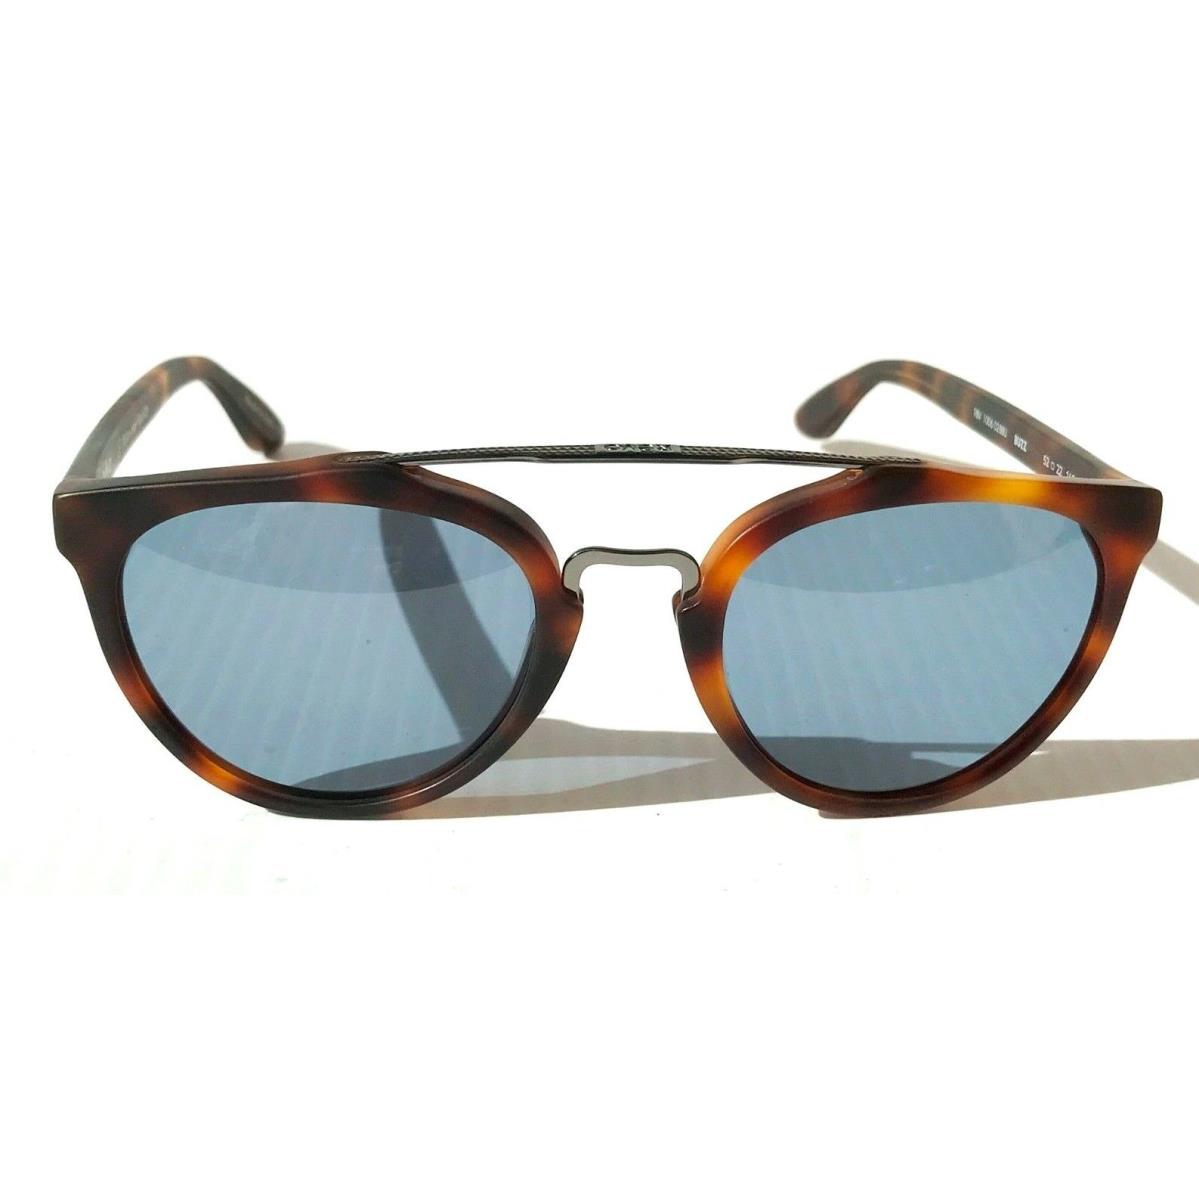 Revo sunglasses BUZZ - Tortoise Frame, Gray Lens